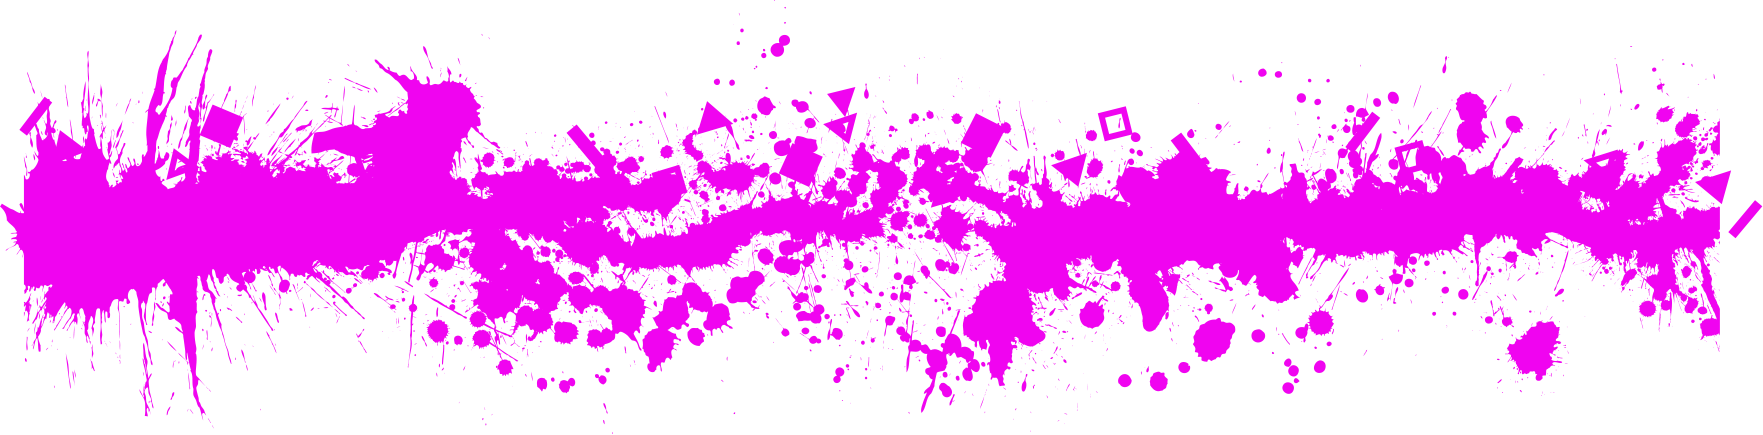 Vibrant Pink Splatter Texture